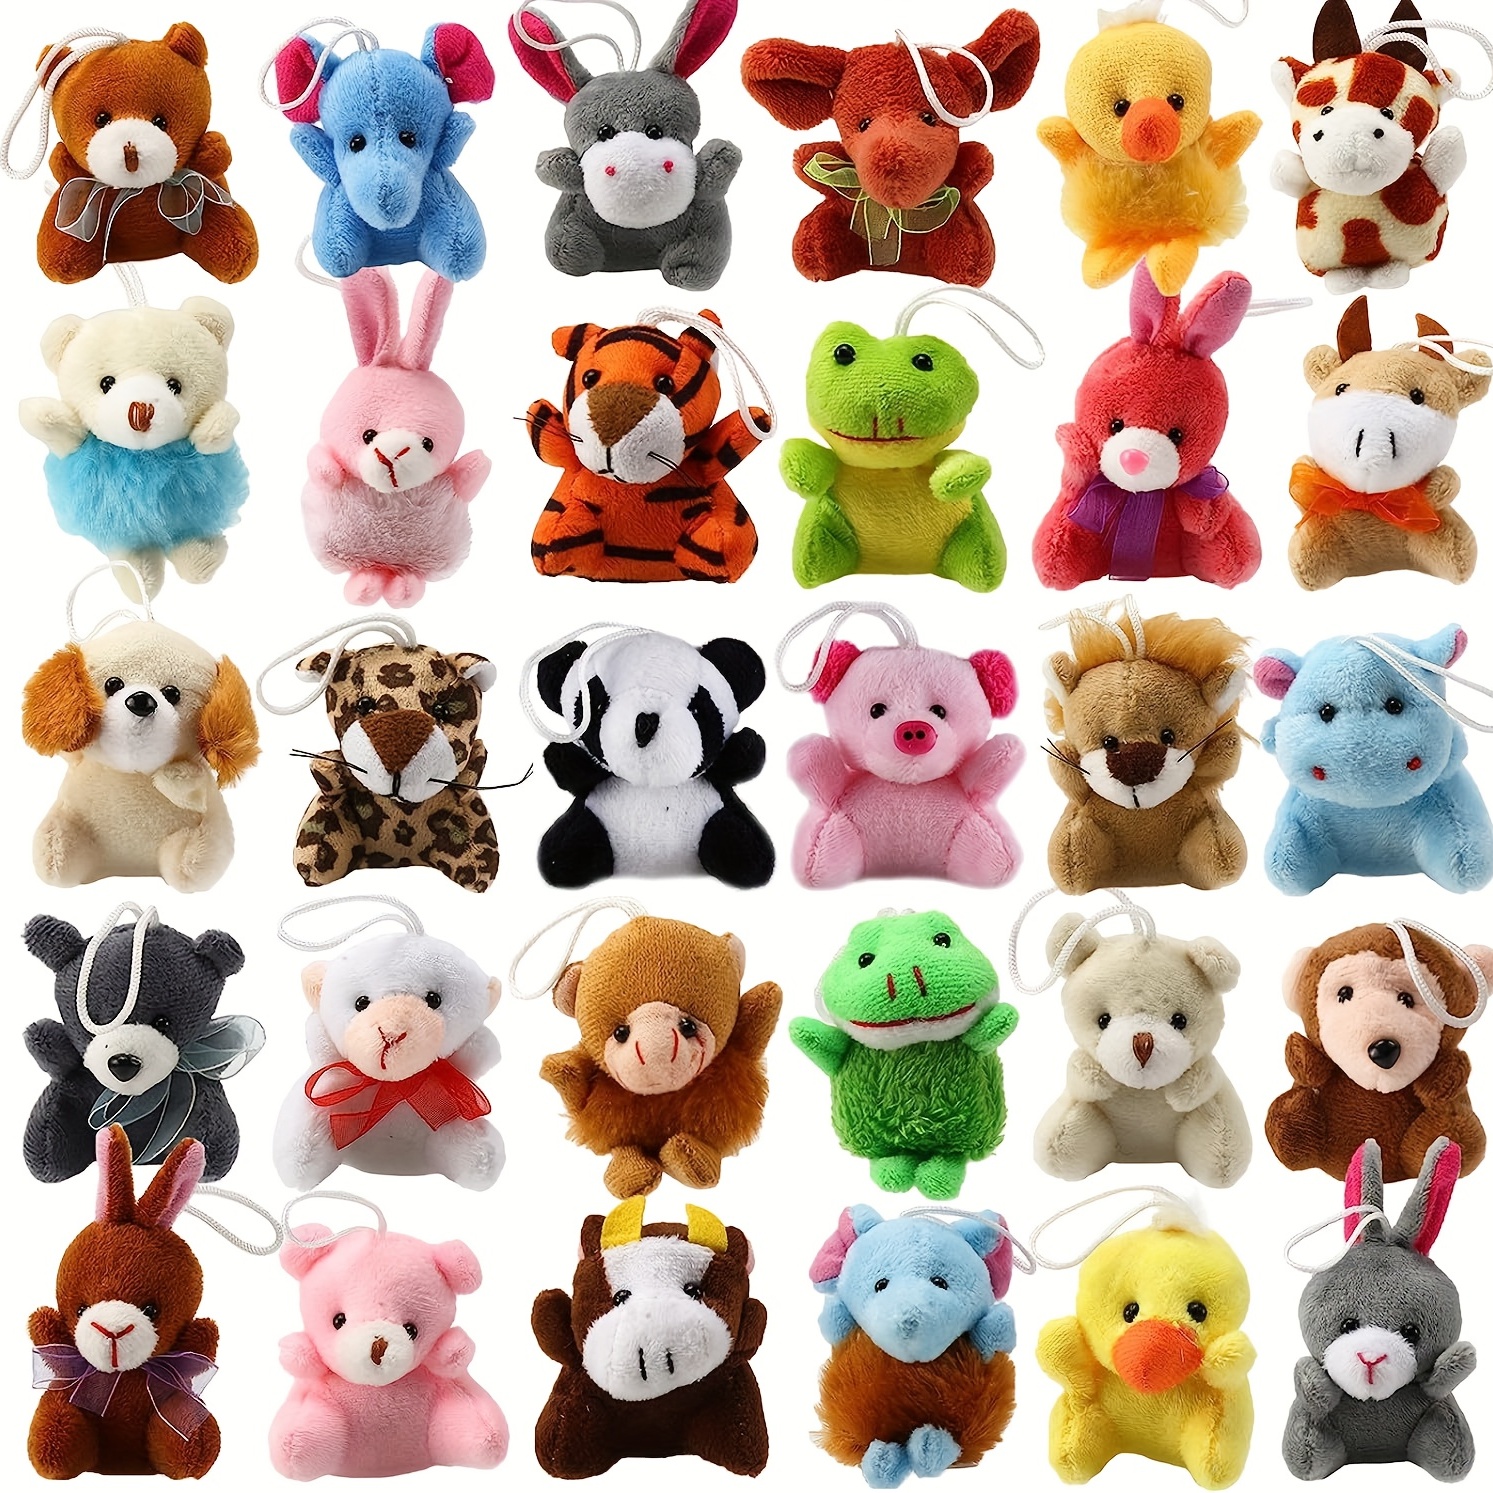  Alphabet Lore Plush,Alphabet Lore Plushies Stuffed Animal Doll  Toys,Kids Birthday Party Favor Preferred Gift for Holidays,Birthdays (E) :  Toys & Games